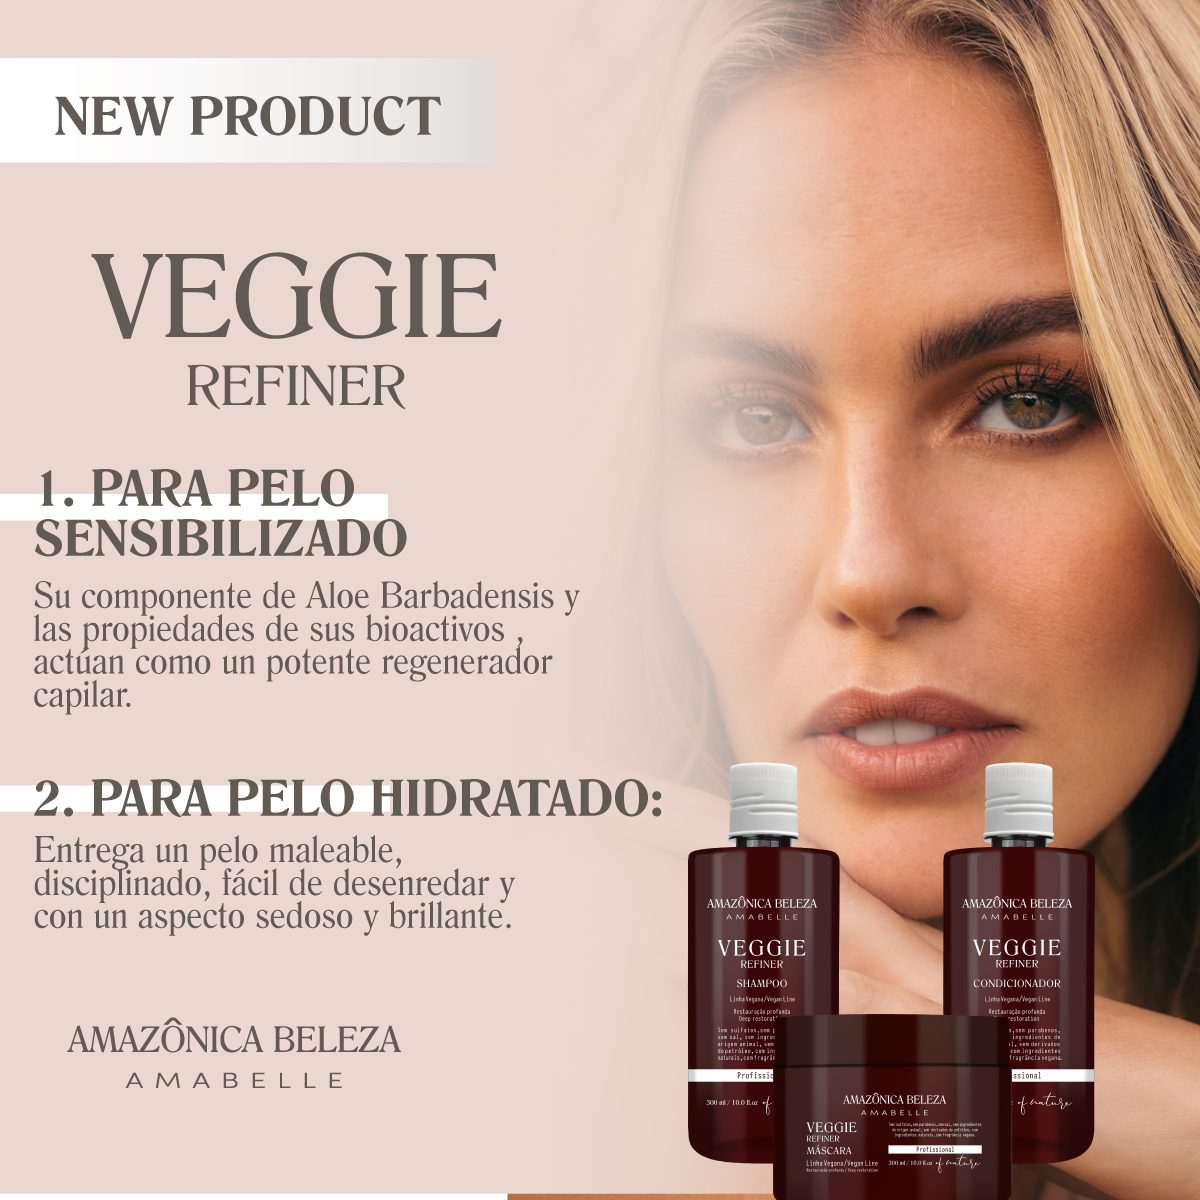 Shampoo vegano - VEGGIE REFINER